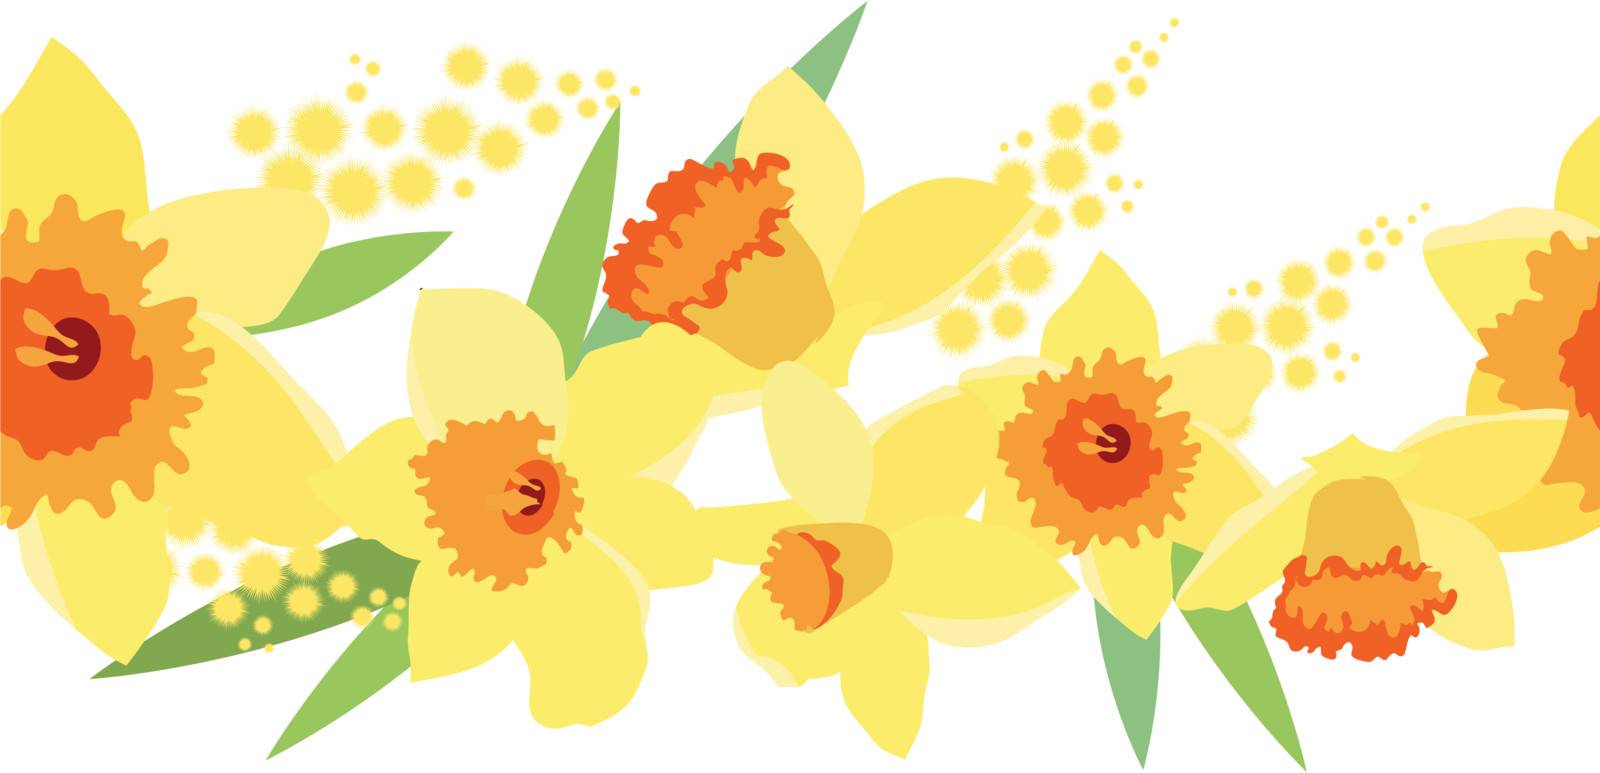 Seamless horizontal daffodil pattern by nurrka